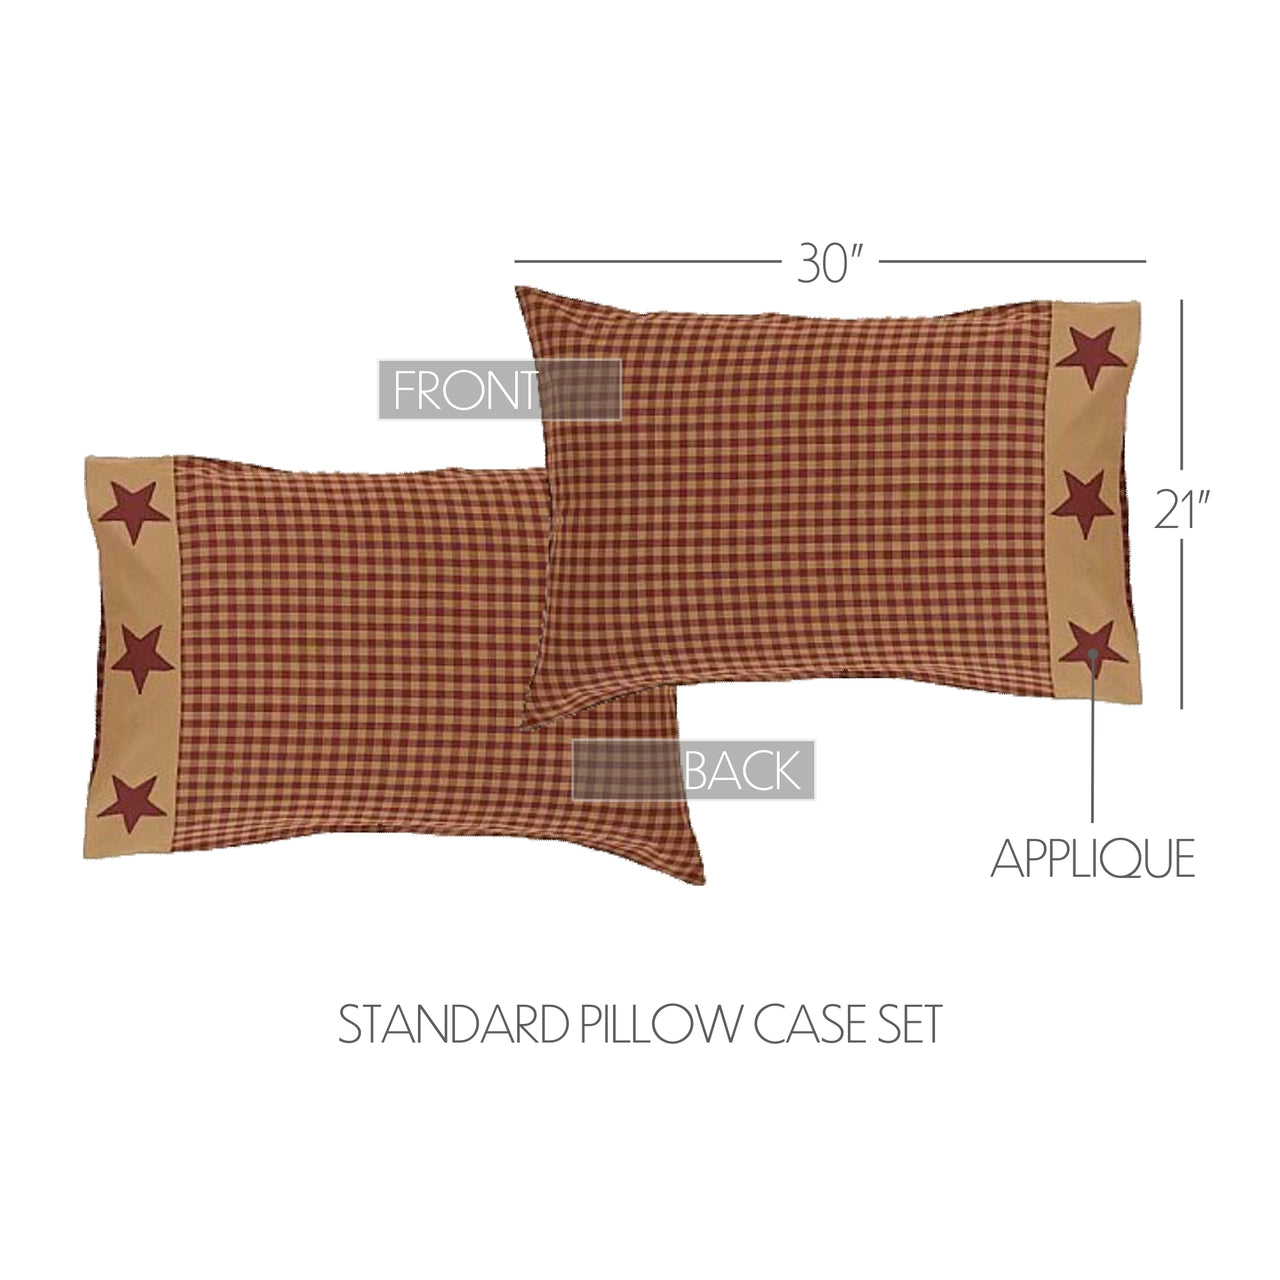 Ninepatch Star Standard Pillow Case w/Applique Border Set of 2 21x30 VHC Brands